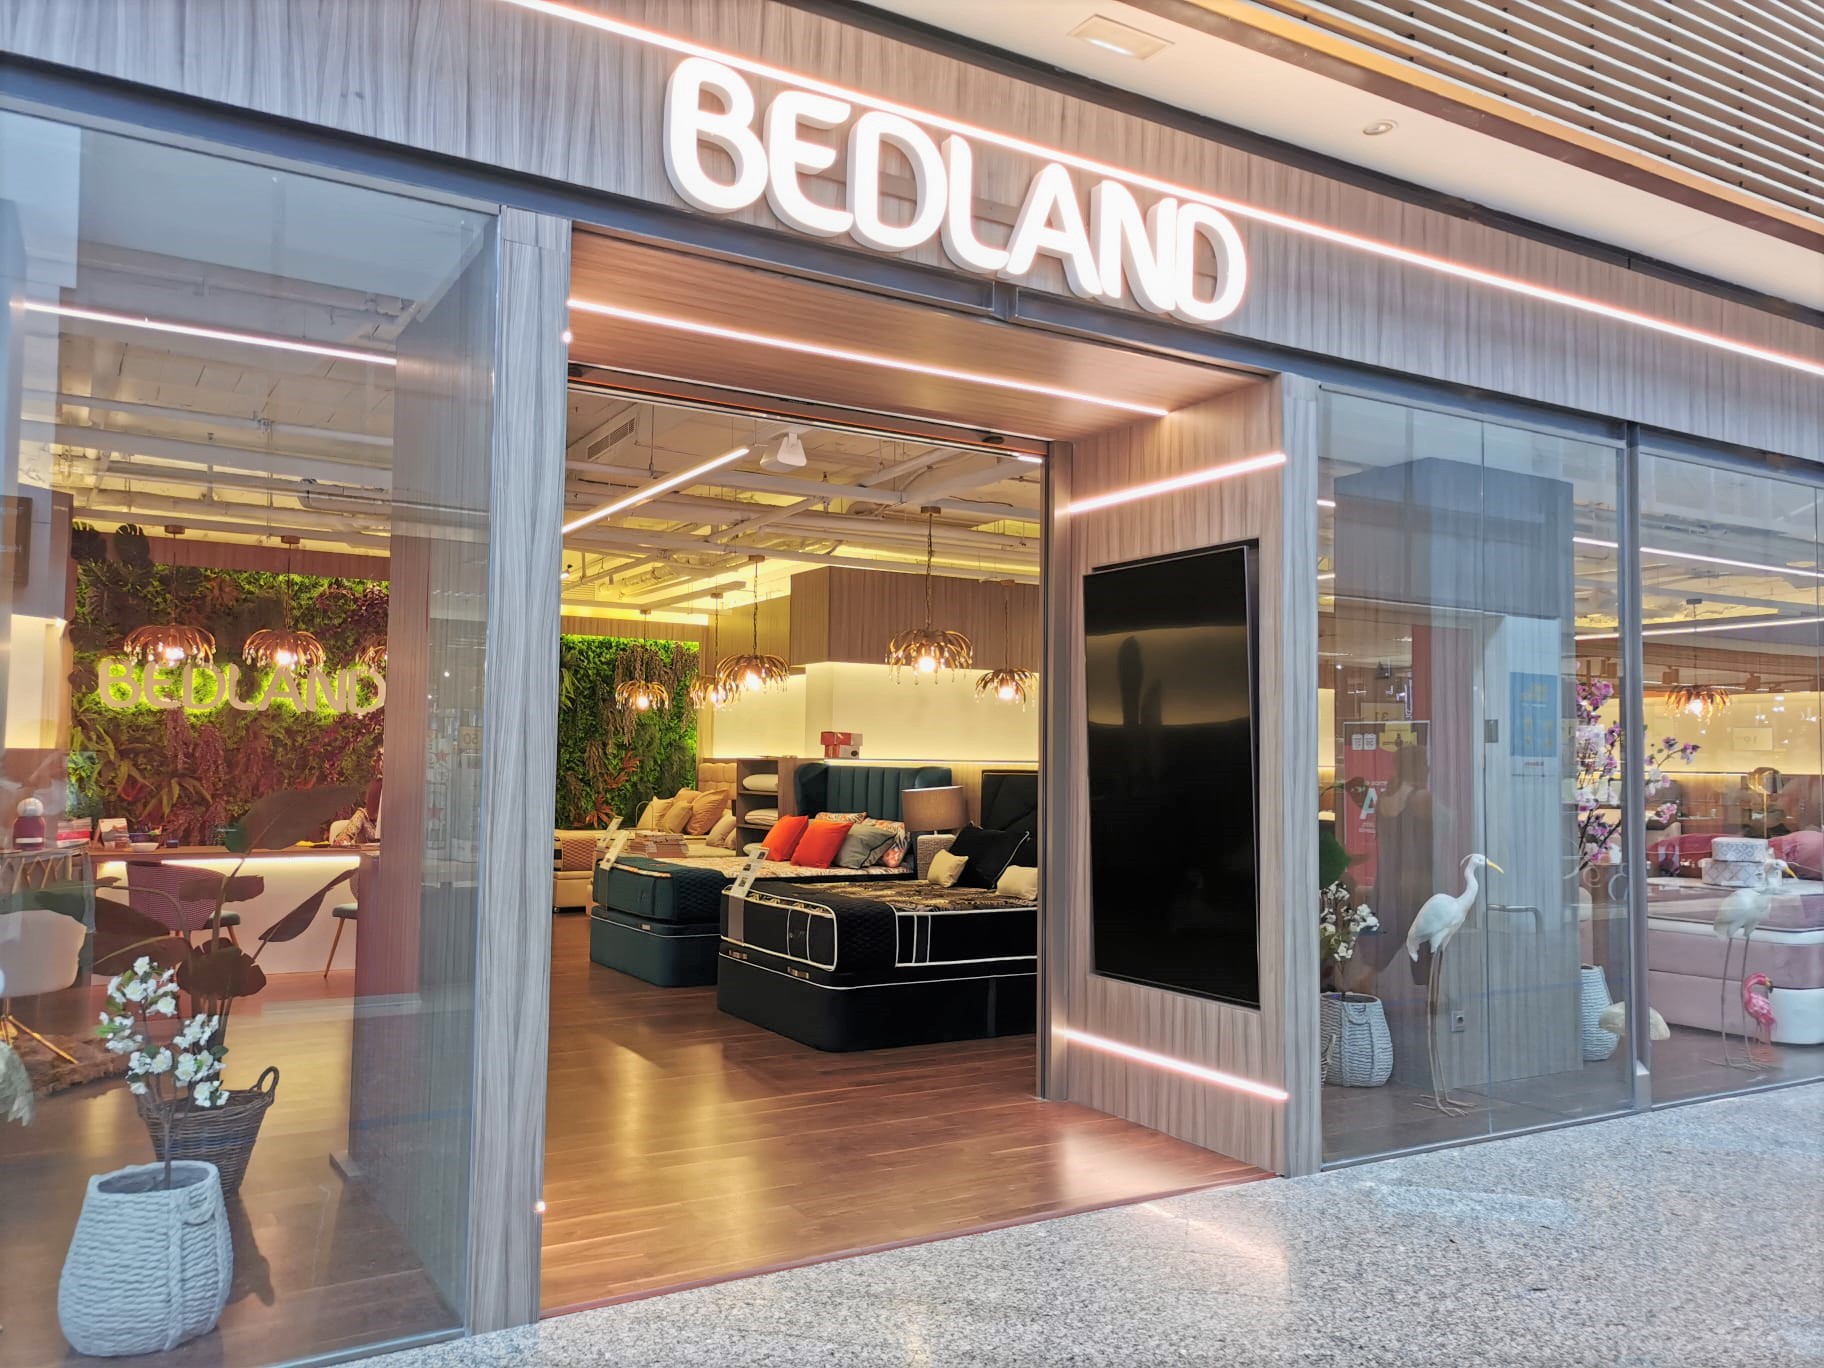 bedland - 1